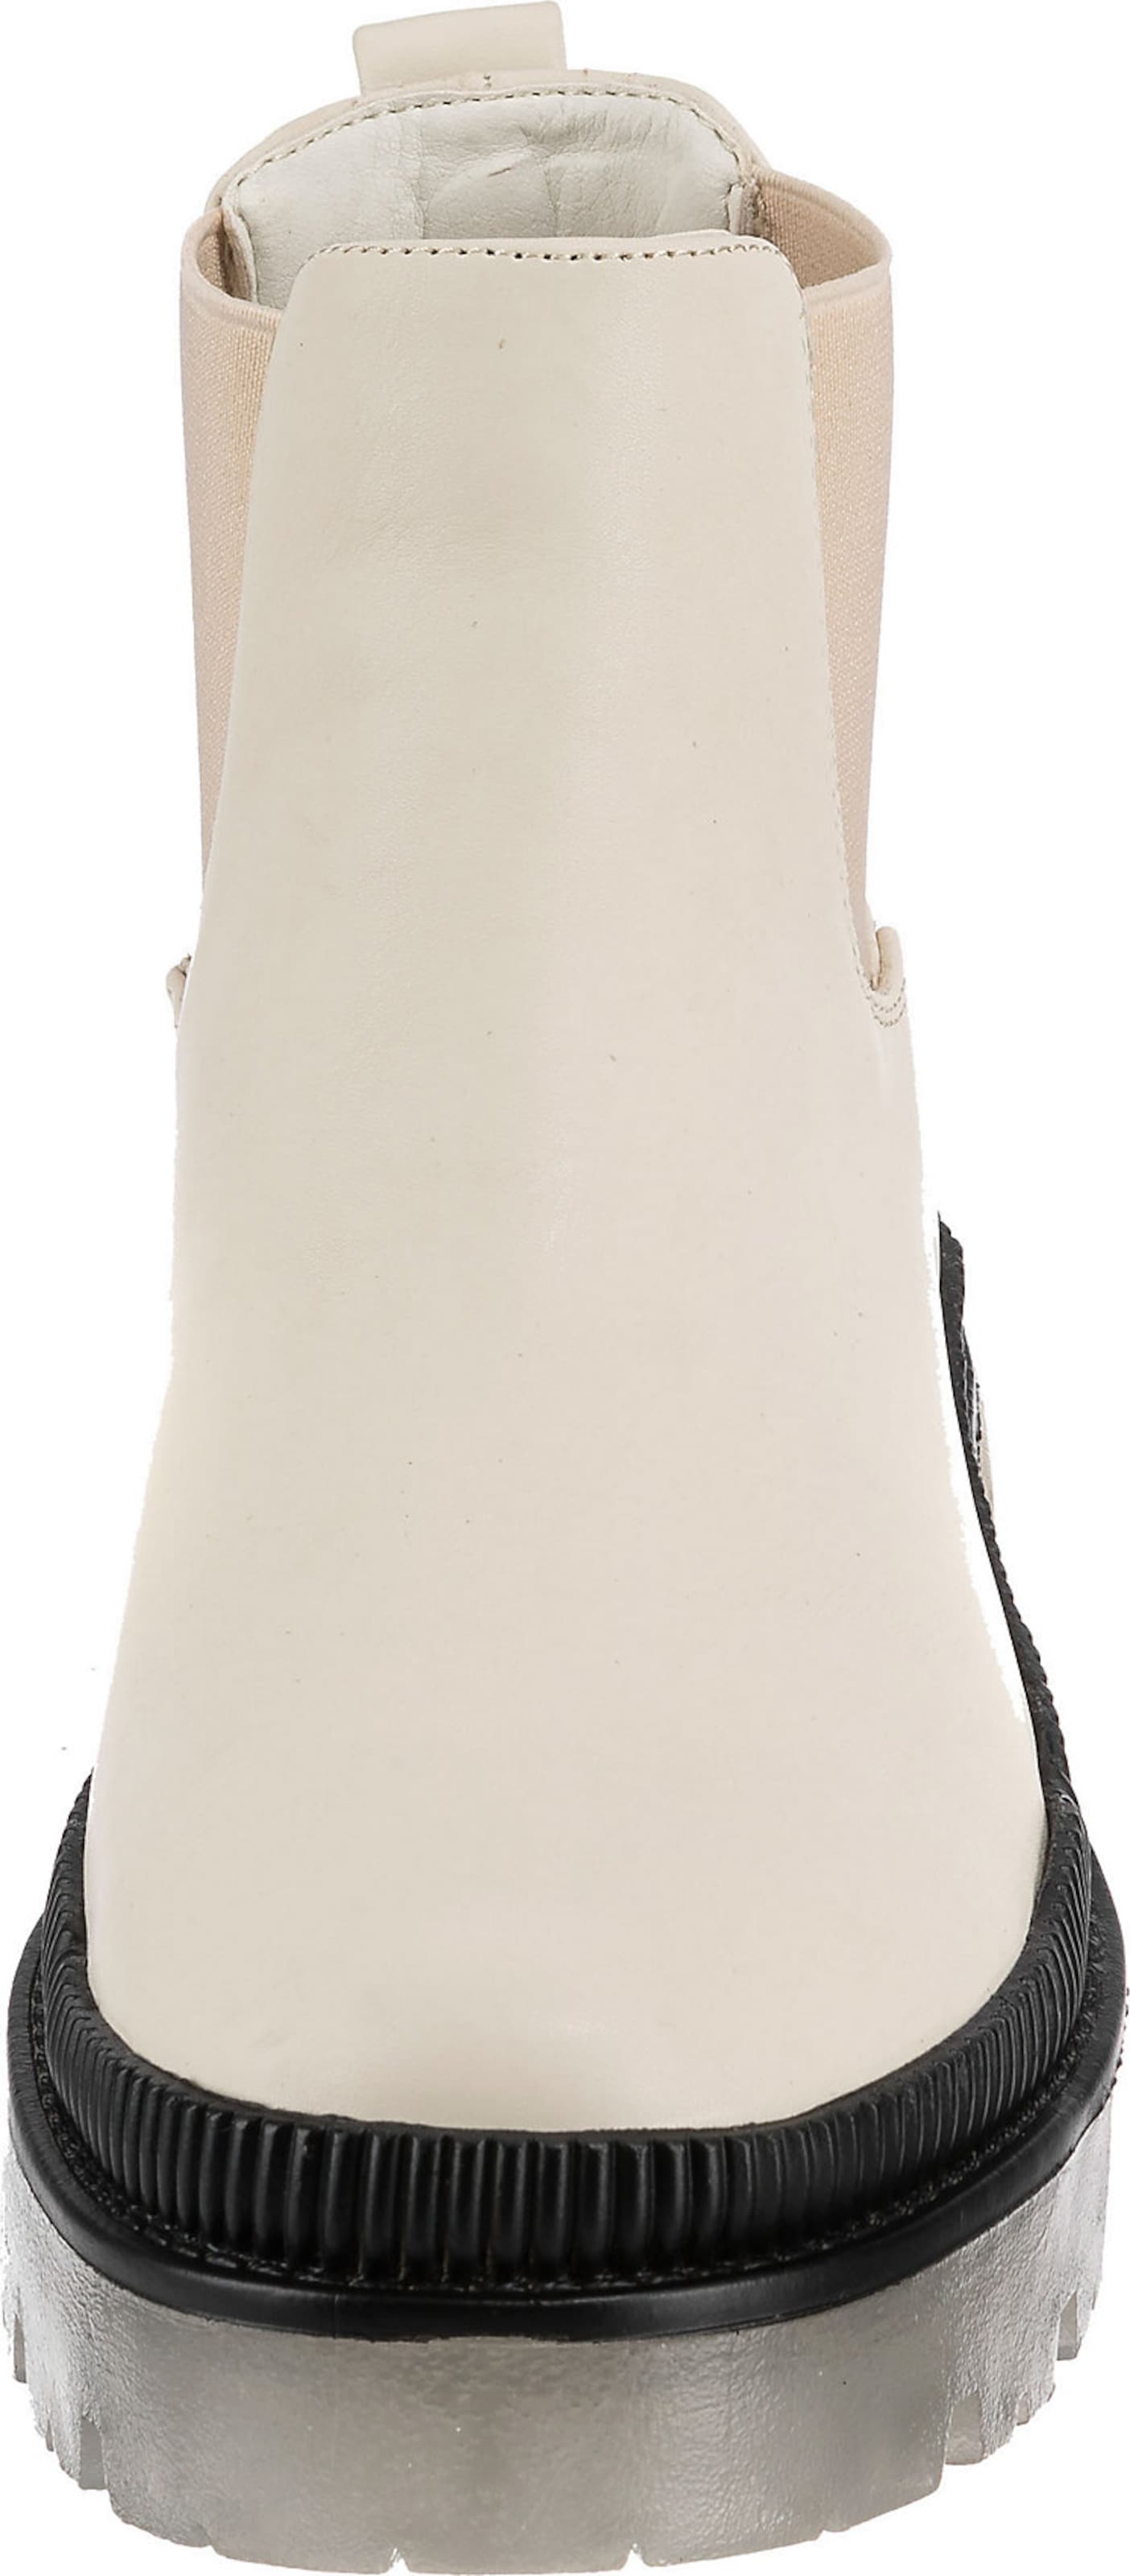 Frauen Stiefeletten ambellis Chelsea Boots in Beige - DN07561